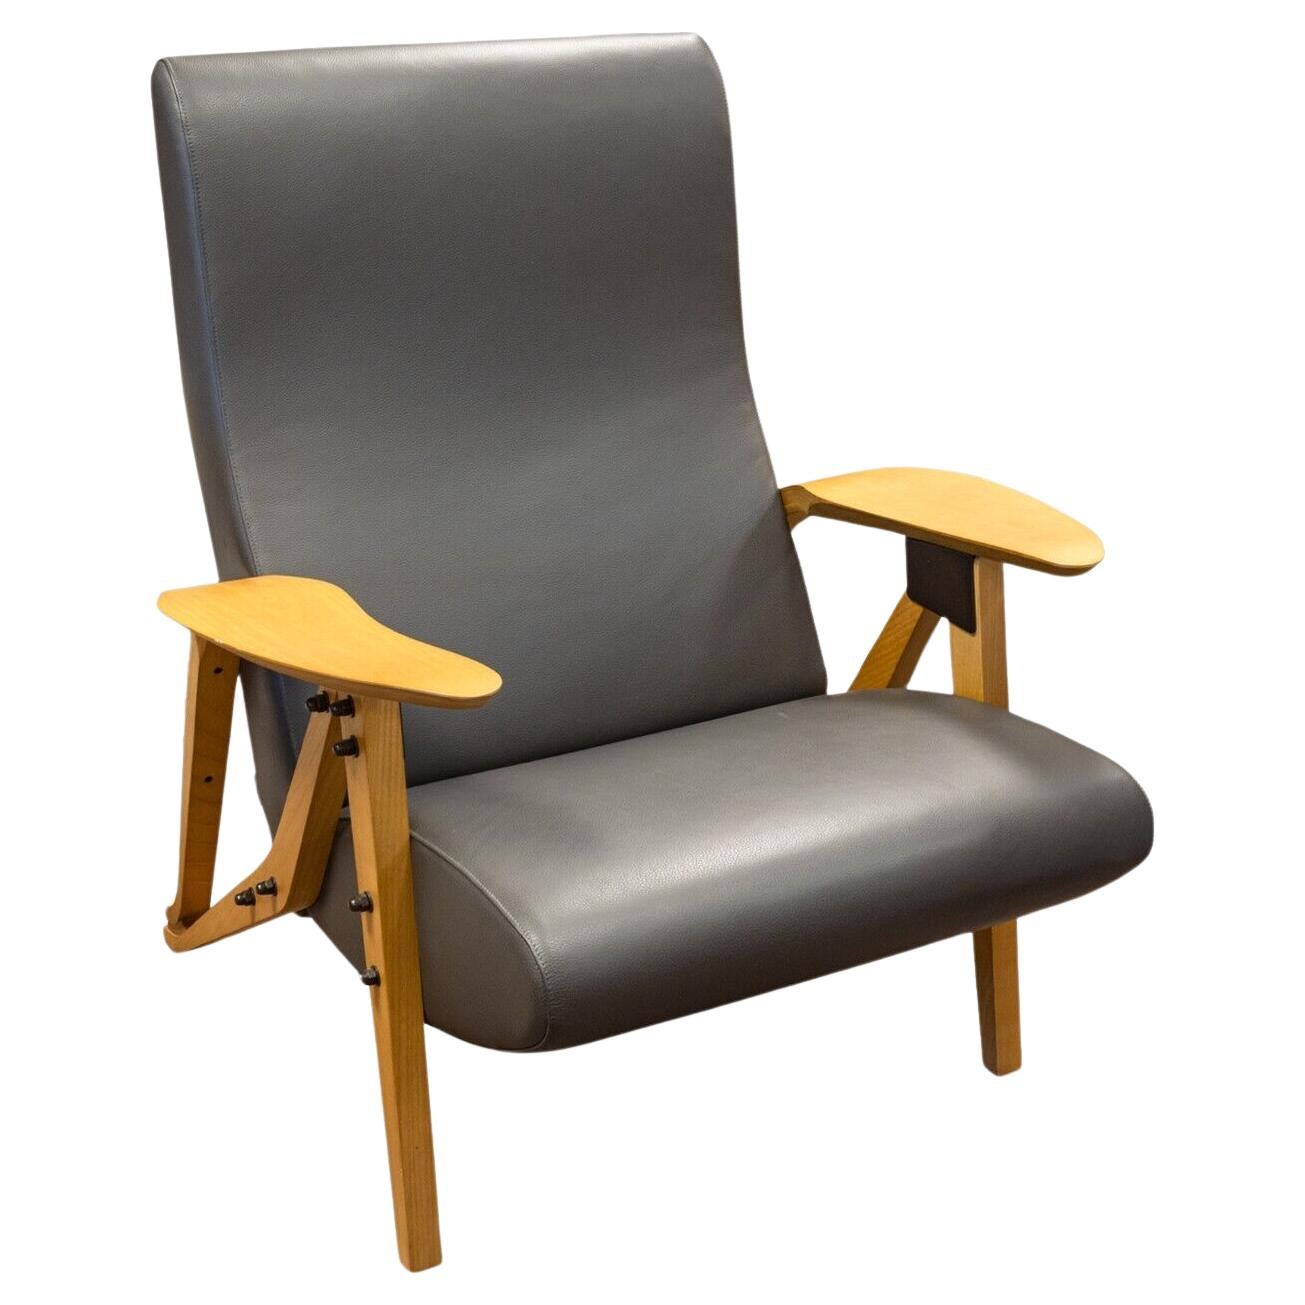 Carlo Mollino Contemporary Modern Gilda Grey Leather Lounge Chair von Zanotta